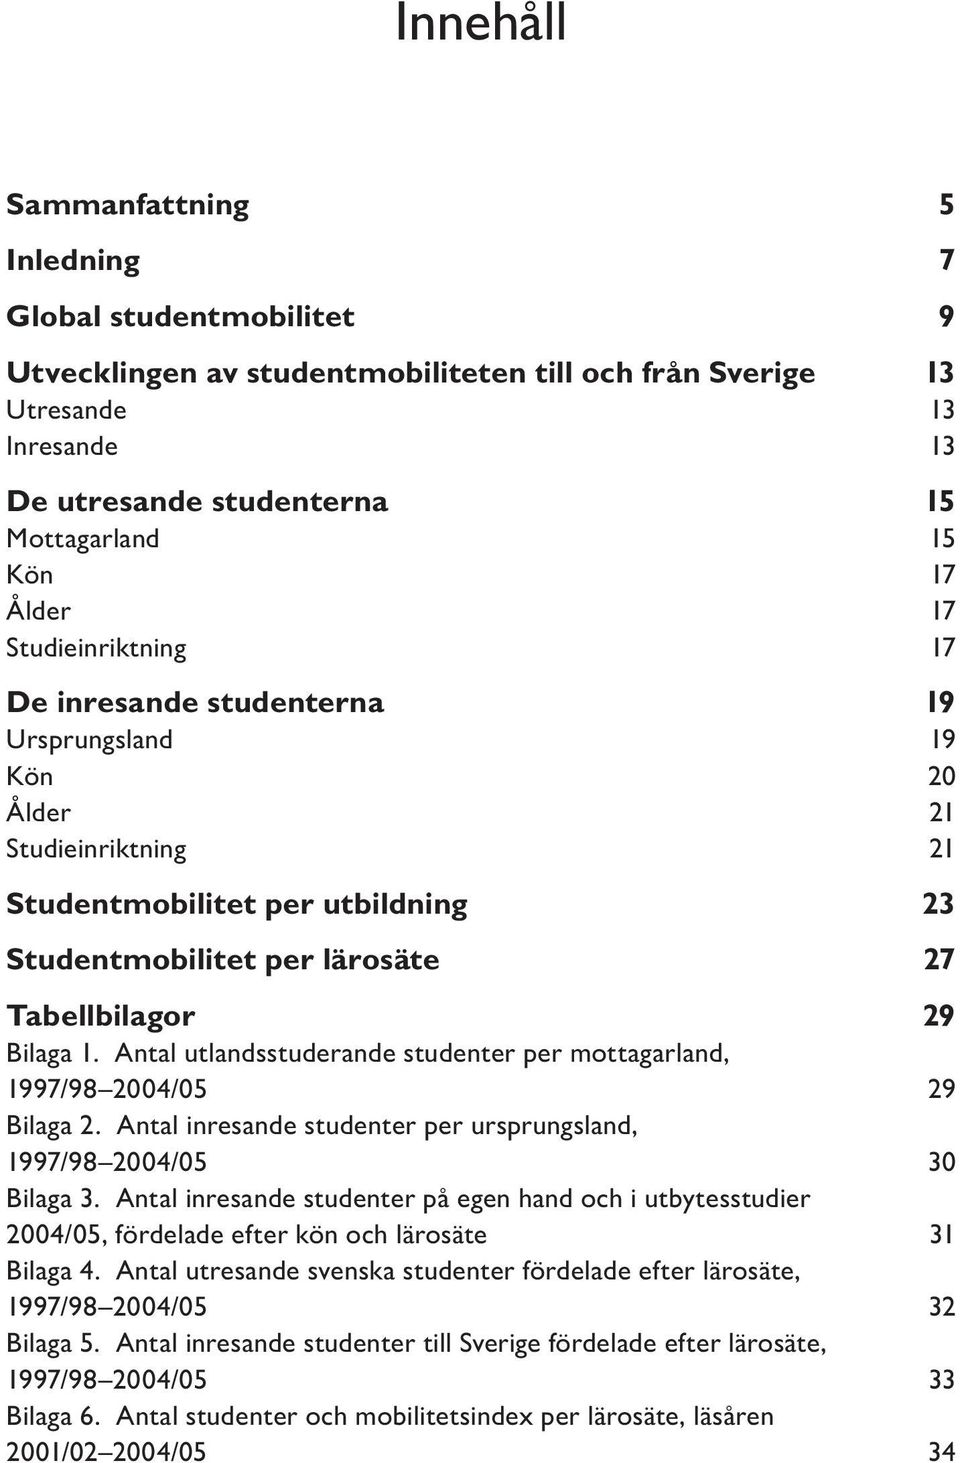 Bilaga 1. Antal utlandsstuderande studenter per mottagarland, 1997/98 2004/05 29 Bilaga 2. Antal inresande studenter per ursprungsland, 1997/98 2004/05 30 Bilaga 3.